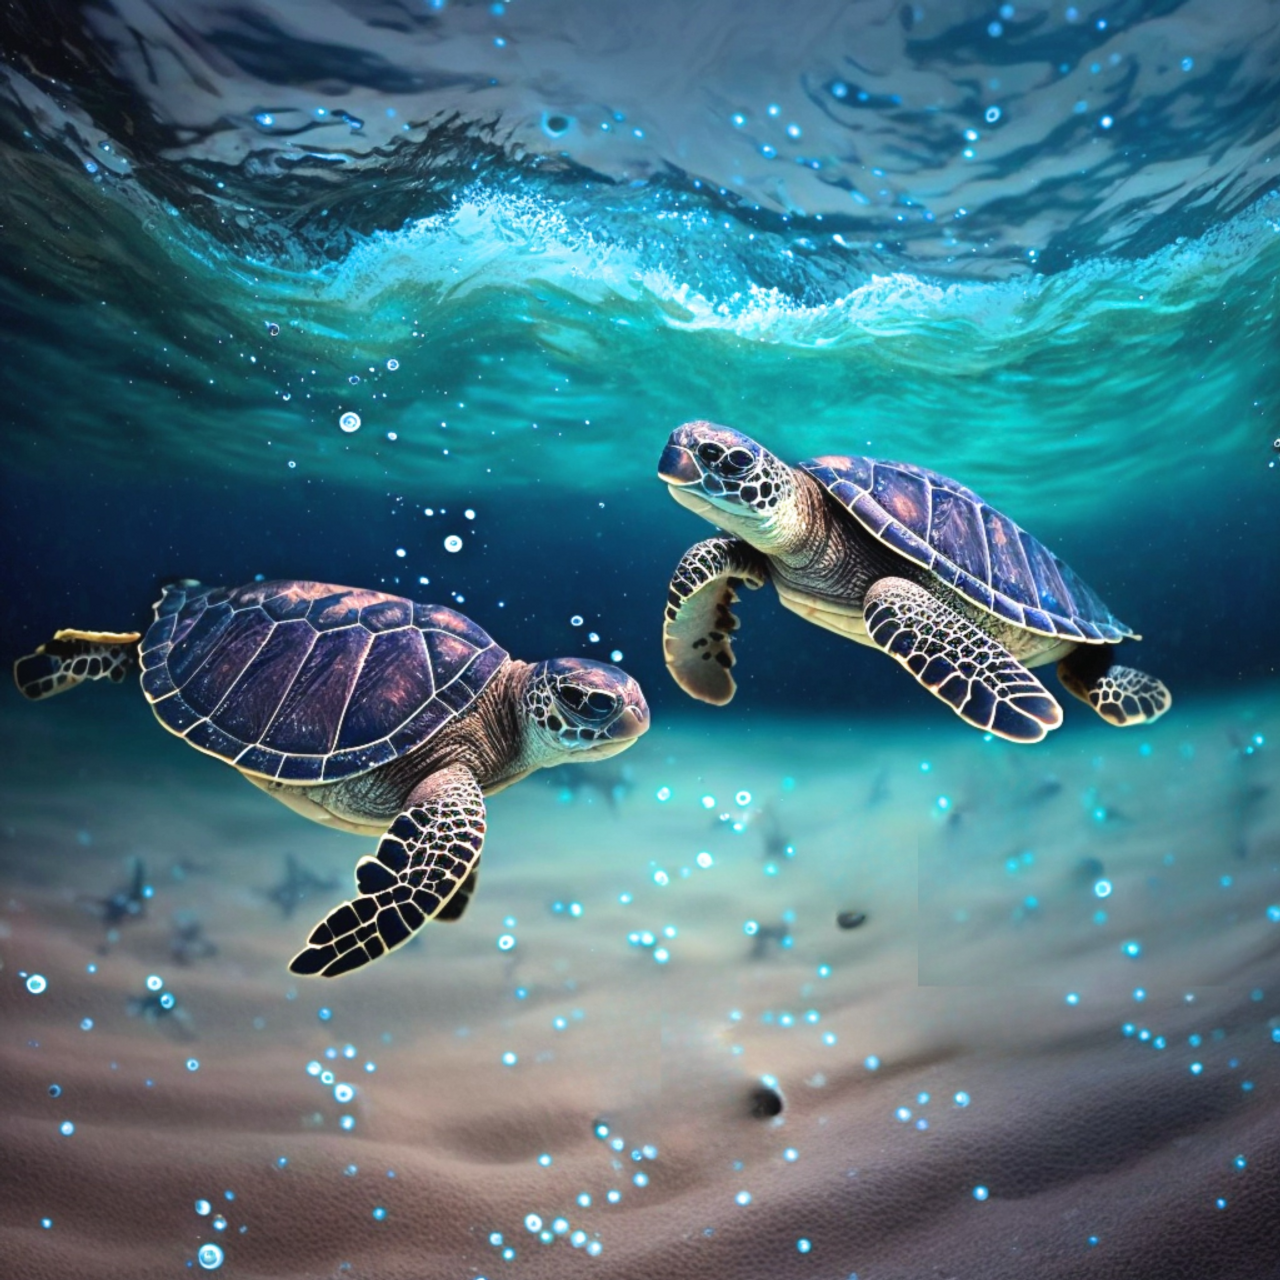 5D Diamond Painting Two Sea Turtles Kit - Bonanza Marketplace